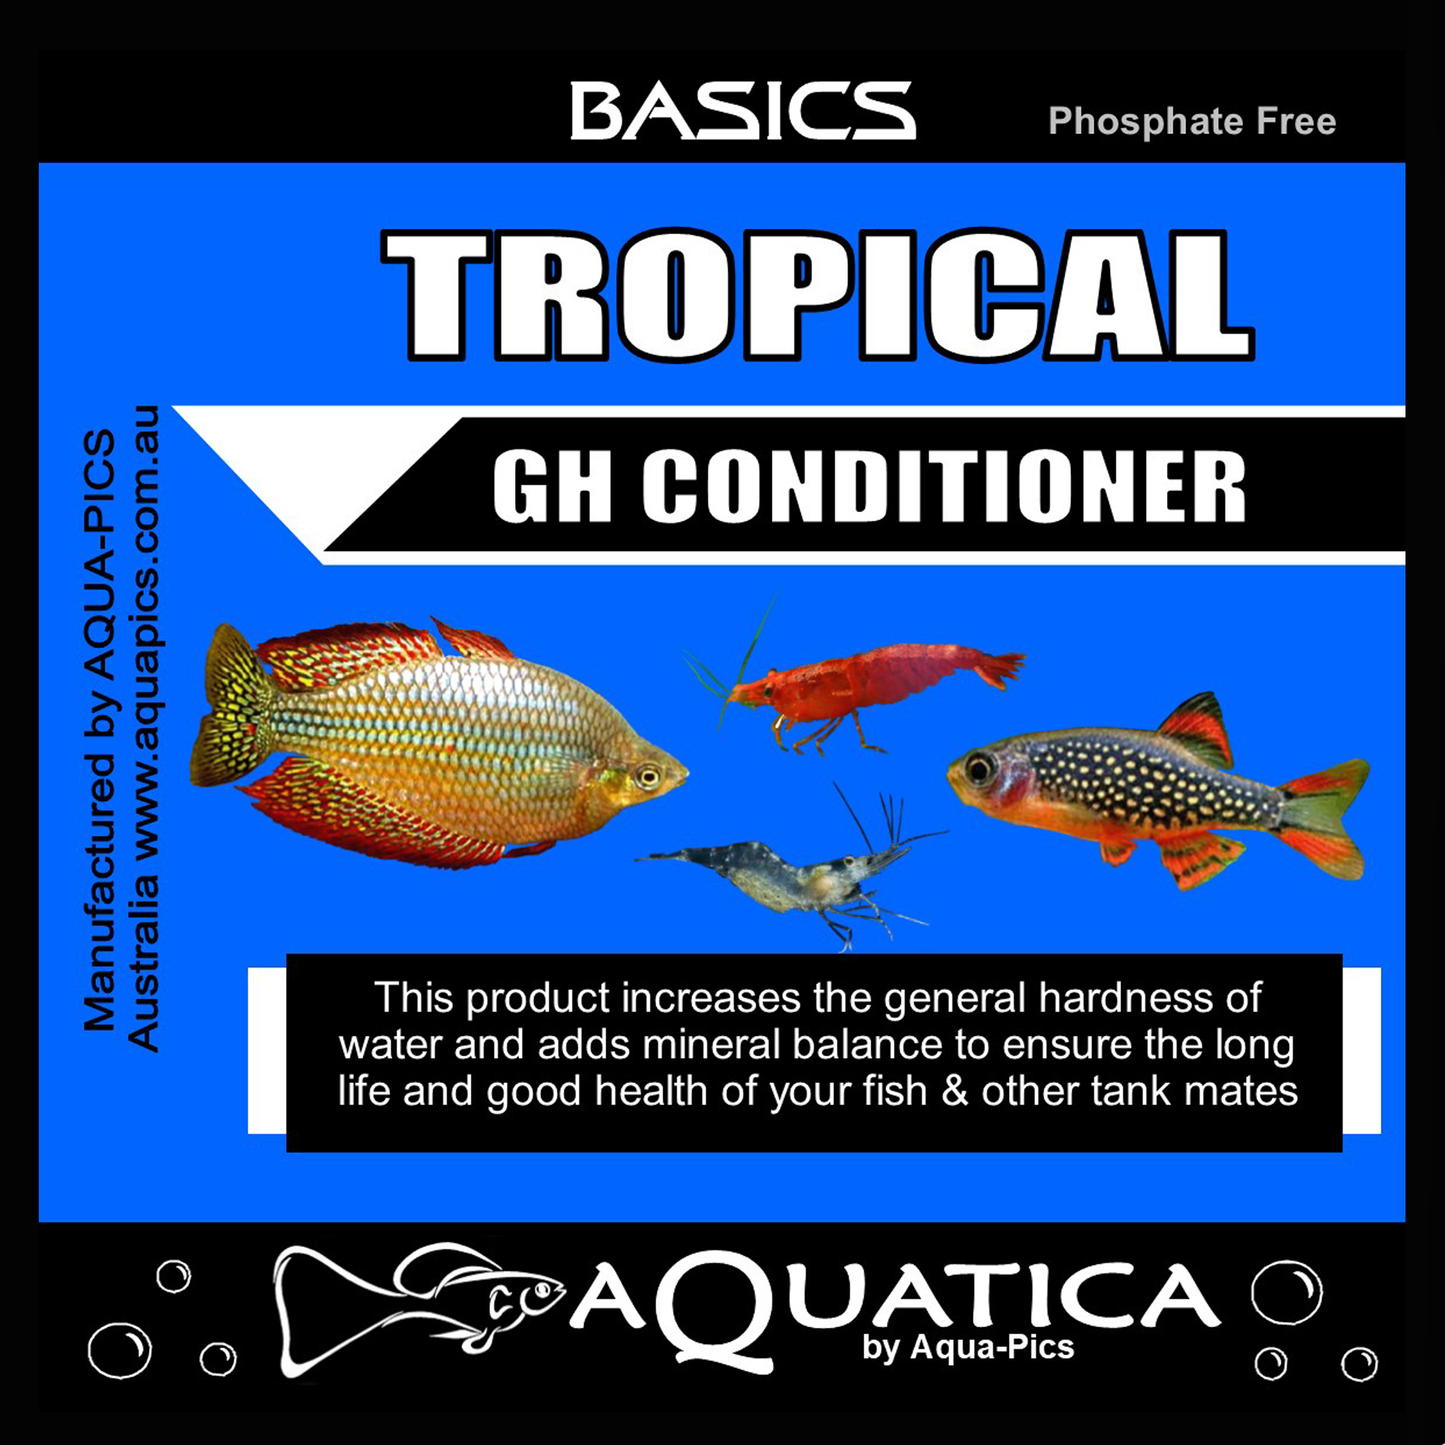 Aquatica Basics Tropical GH Conditioner 2kg bag